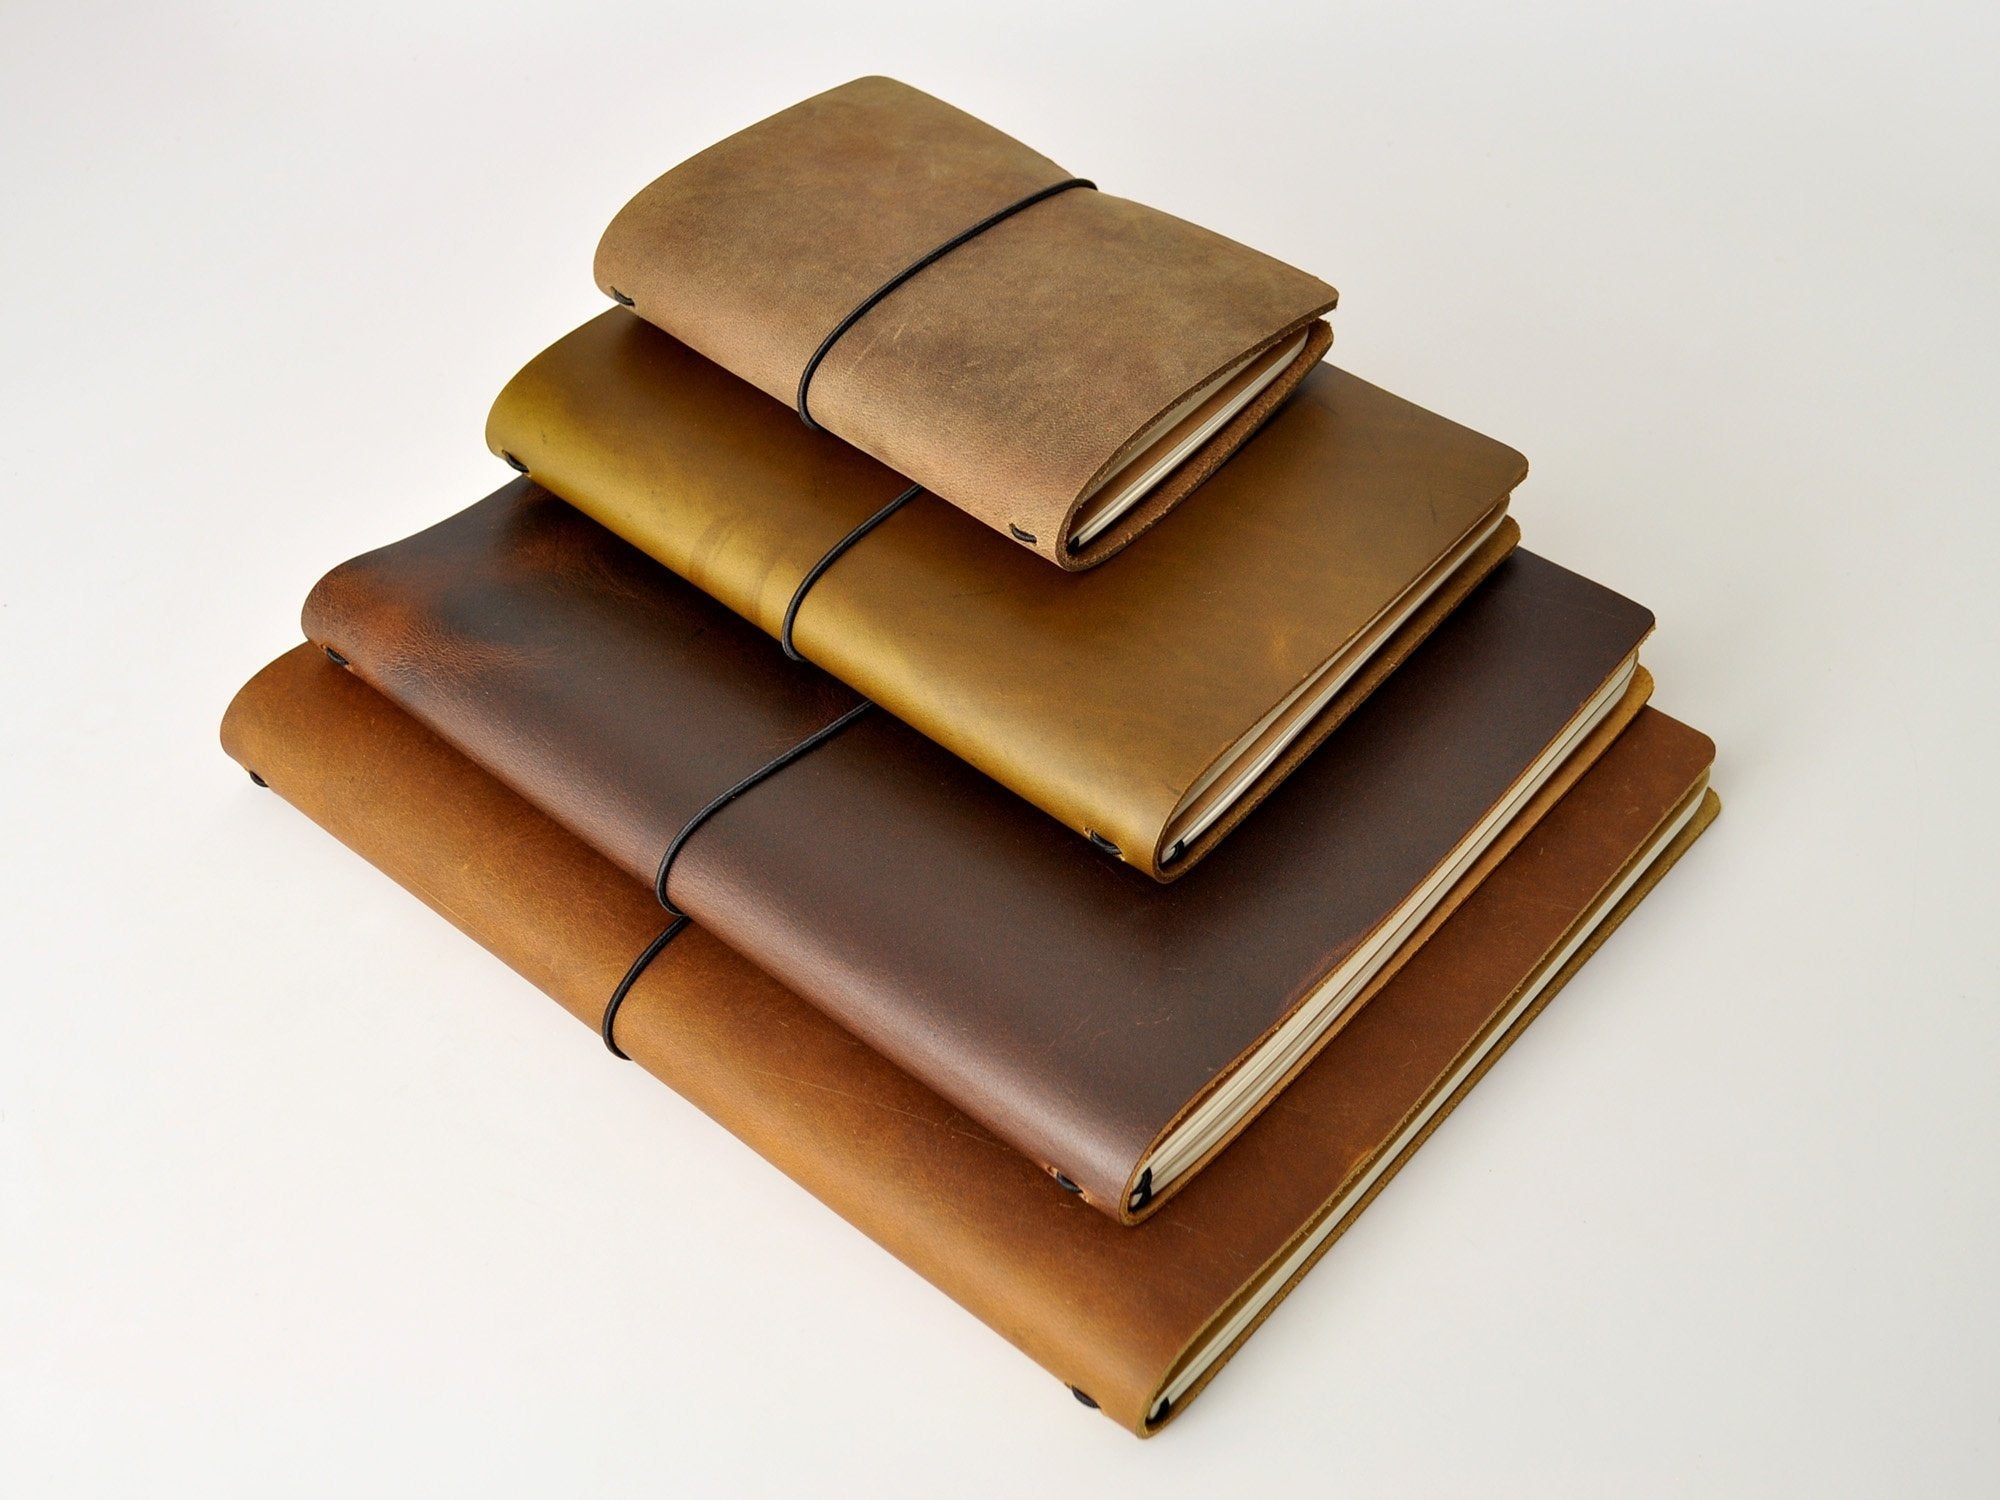 World Travel Journal, Vintage Chestnut Leather Journal